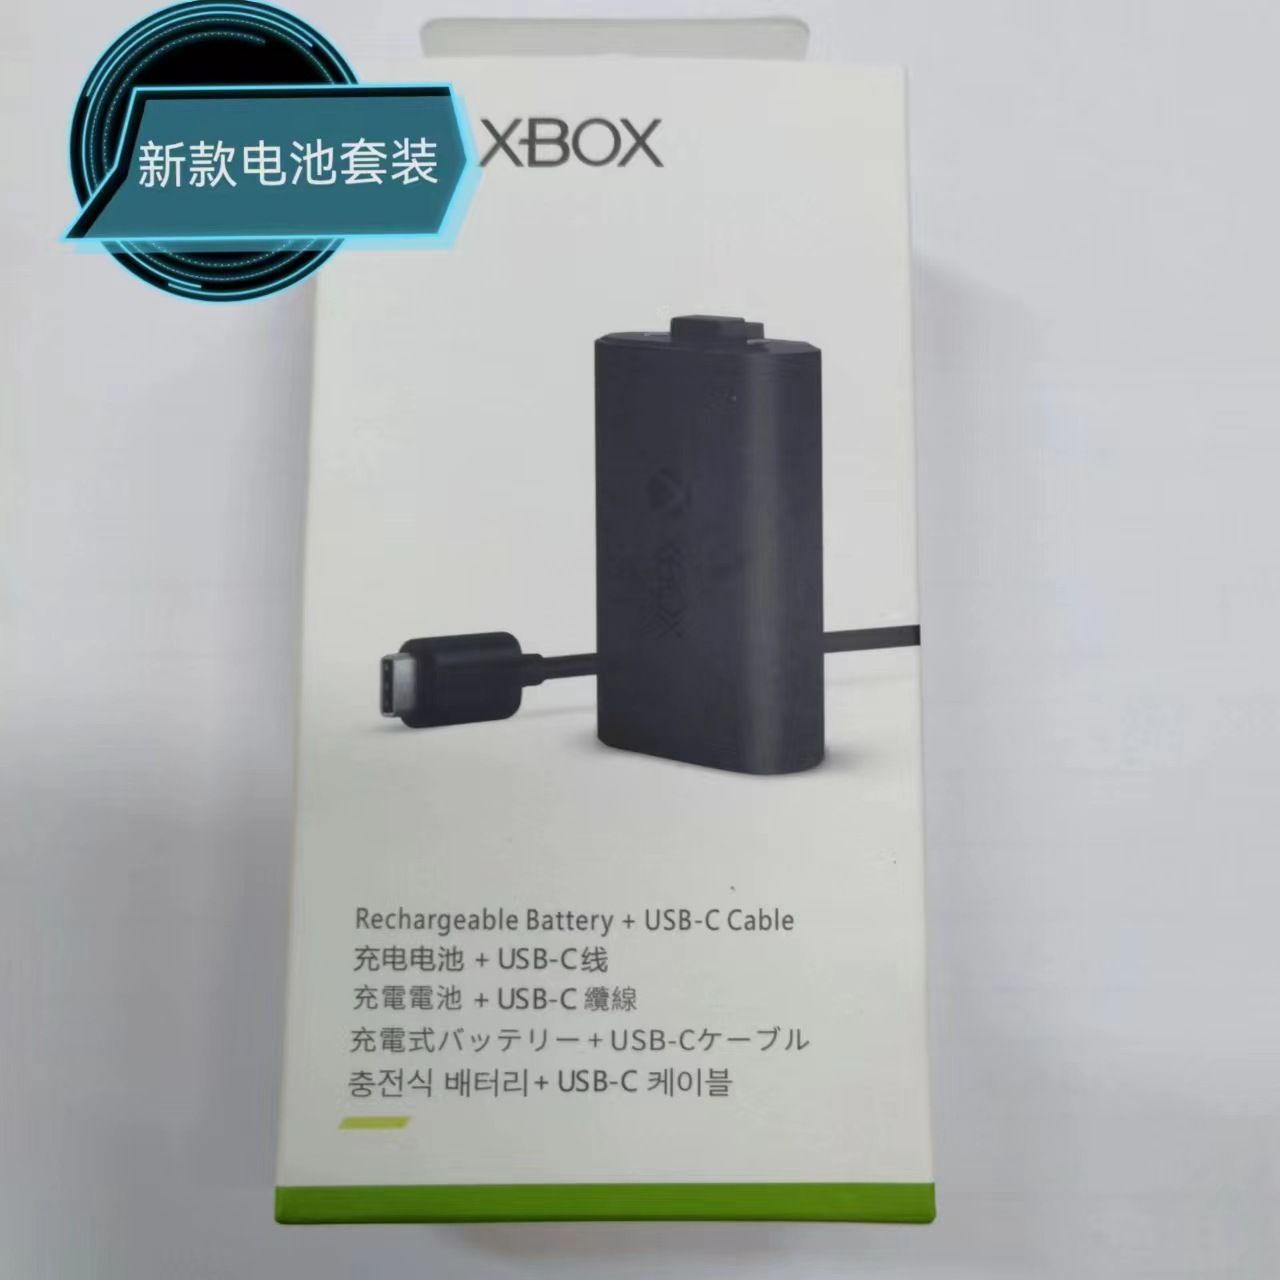 ОригинальнаяАккумуляторнаябатареяXbox+USB-CкабельдлягеймпадаMicrosoftXboxSeriesS/X